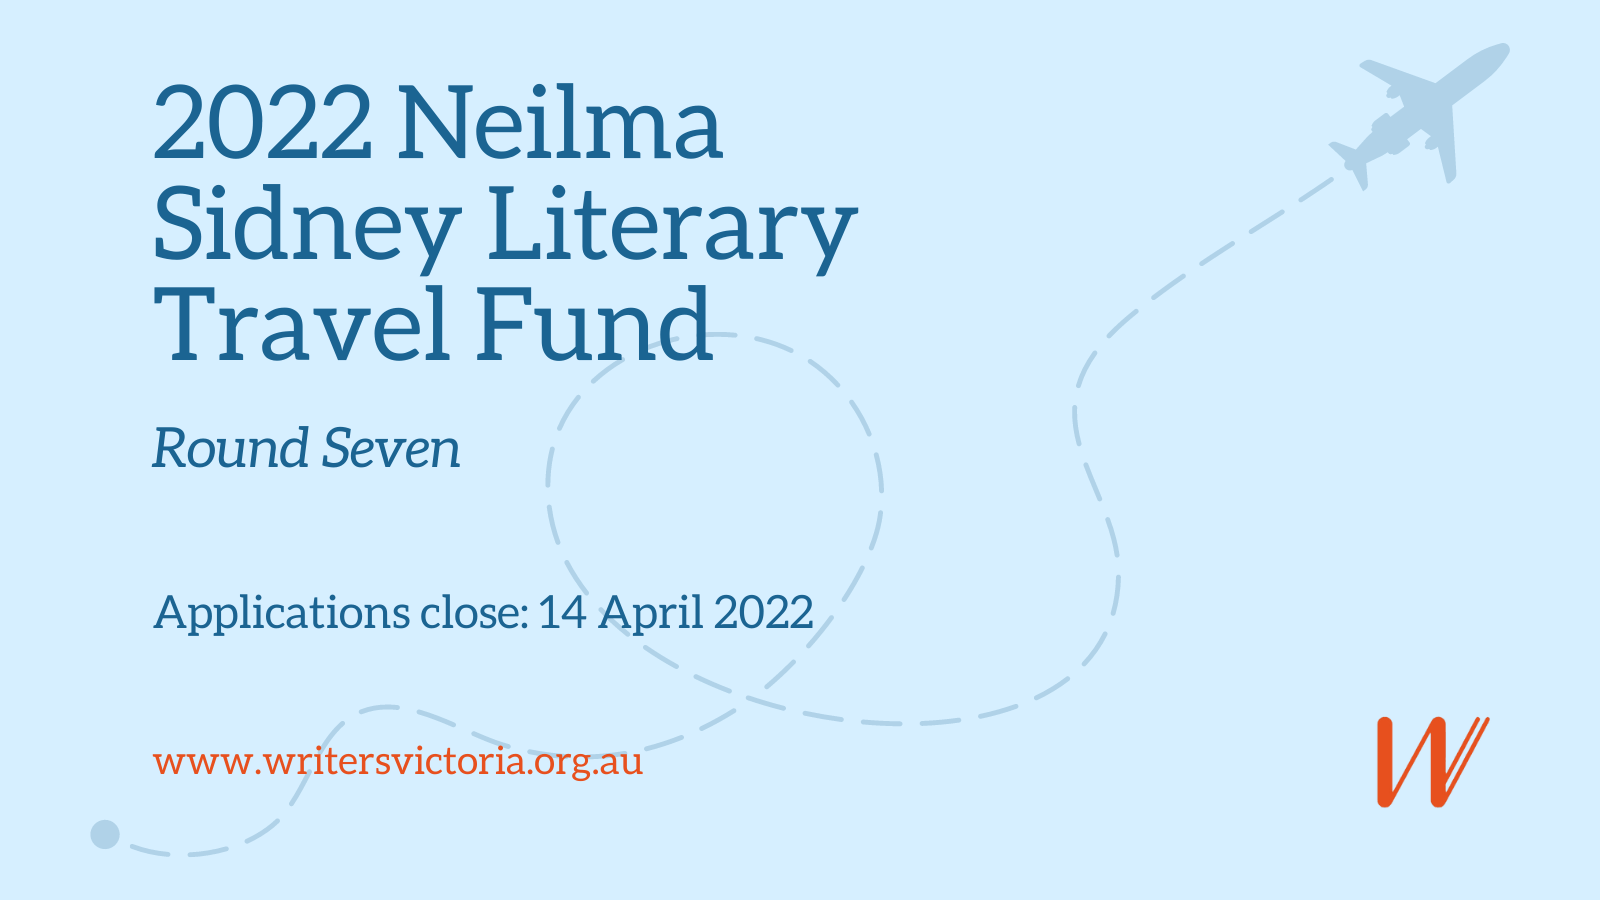 2022 Neilma Sidney Literary Travel Fund Round Seven